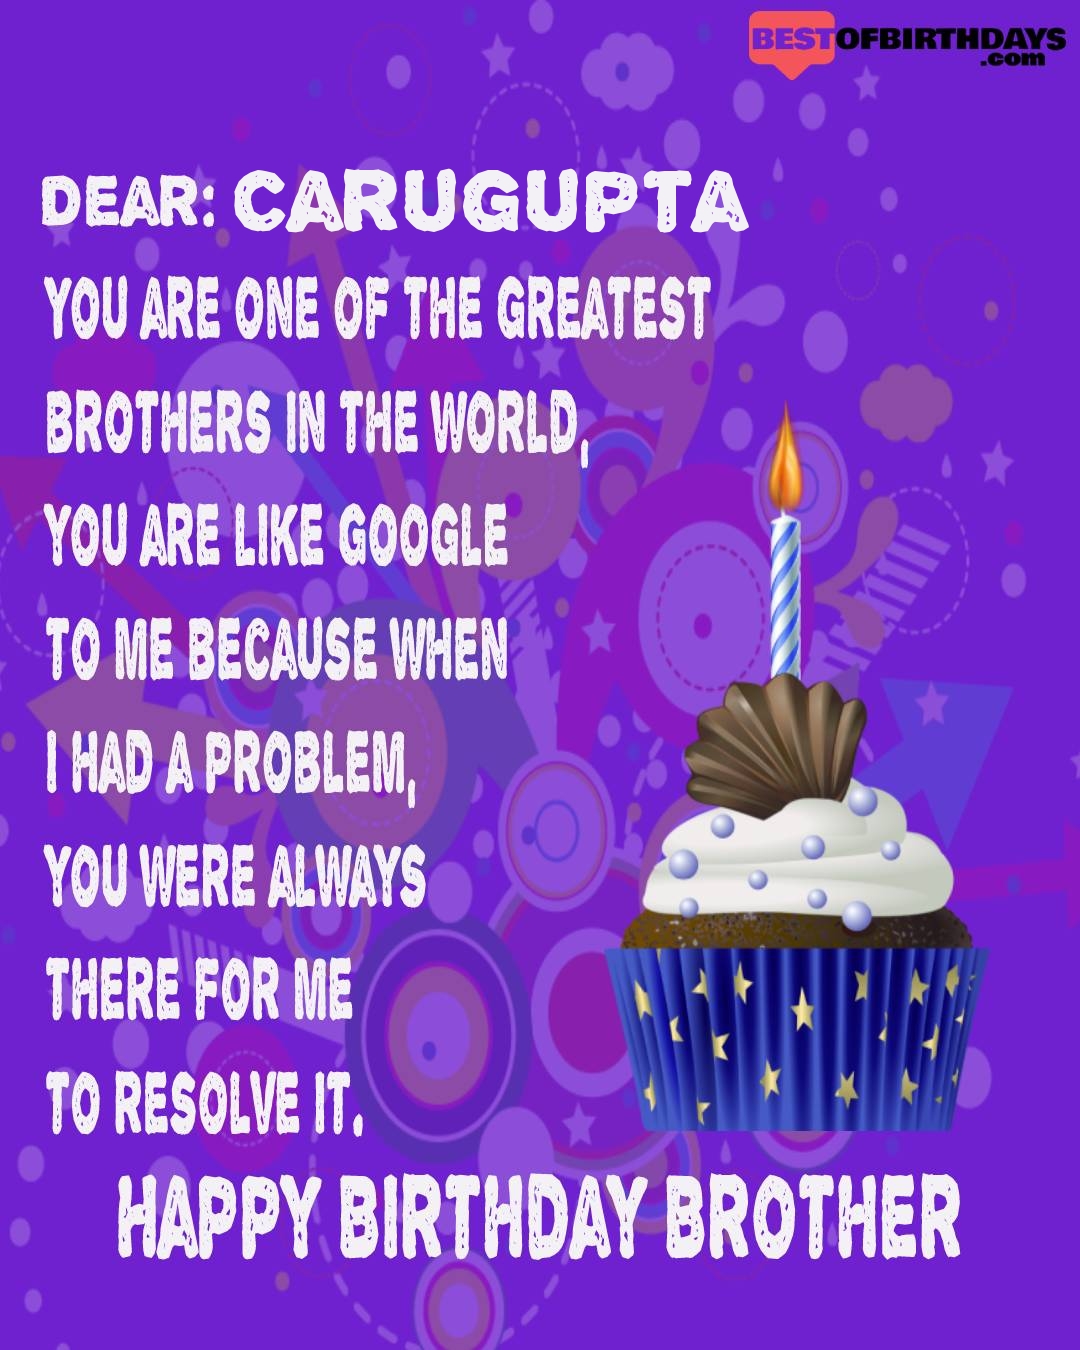 Happy birthday carugupta bhai brother bro